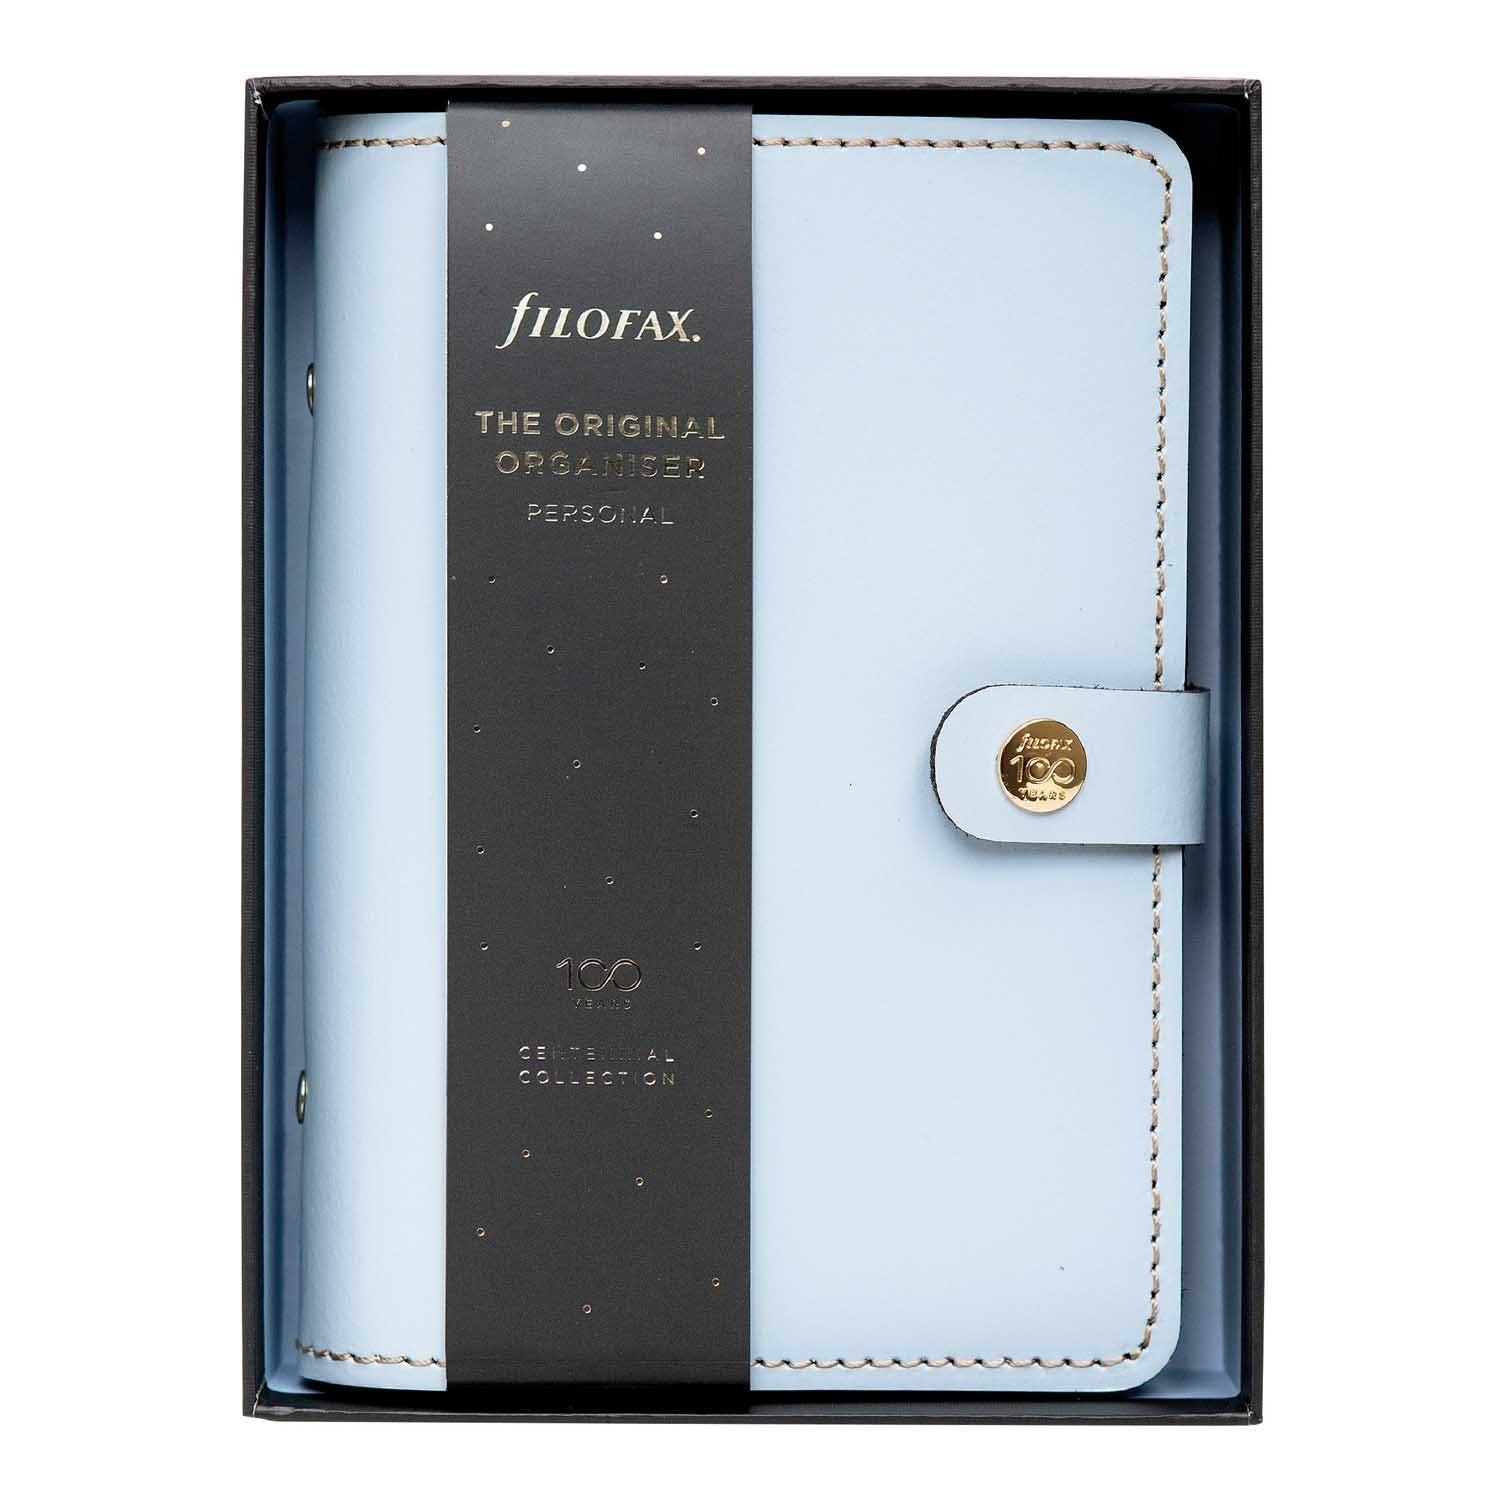 Filofax Limited Edition 2022 Centennial Personal Size Original Genuine Leather Organizer Sky Blue in Gift Box